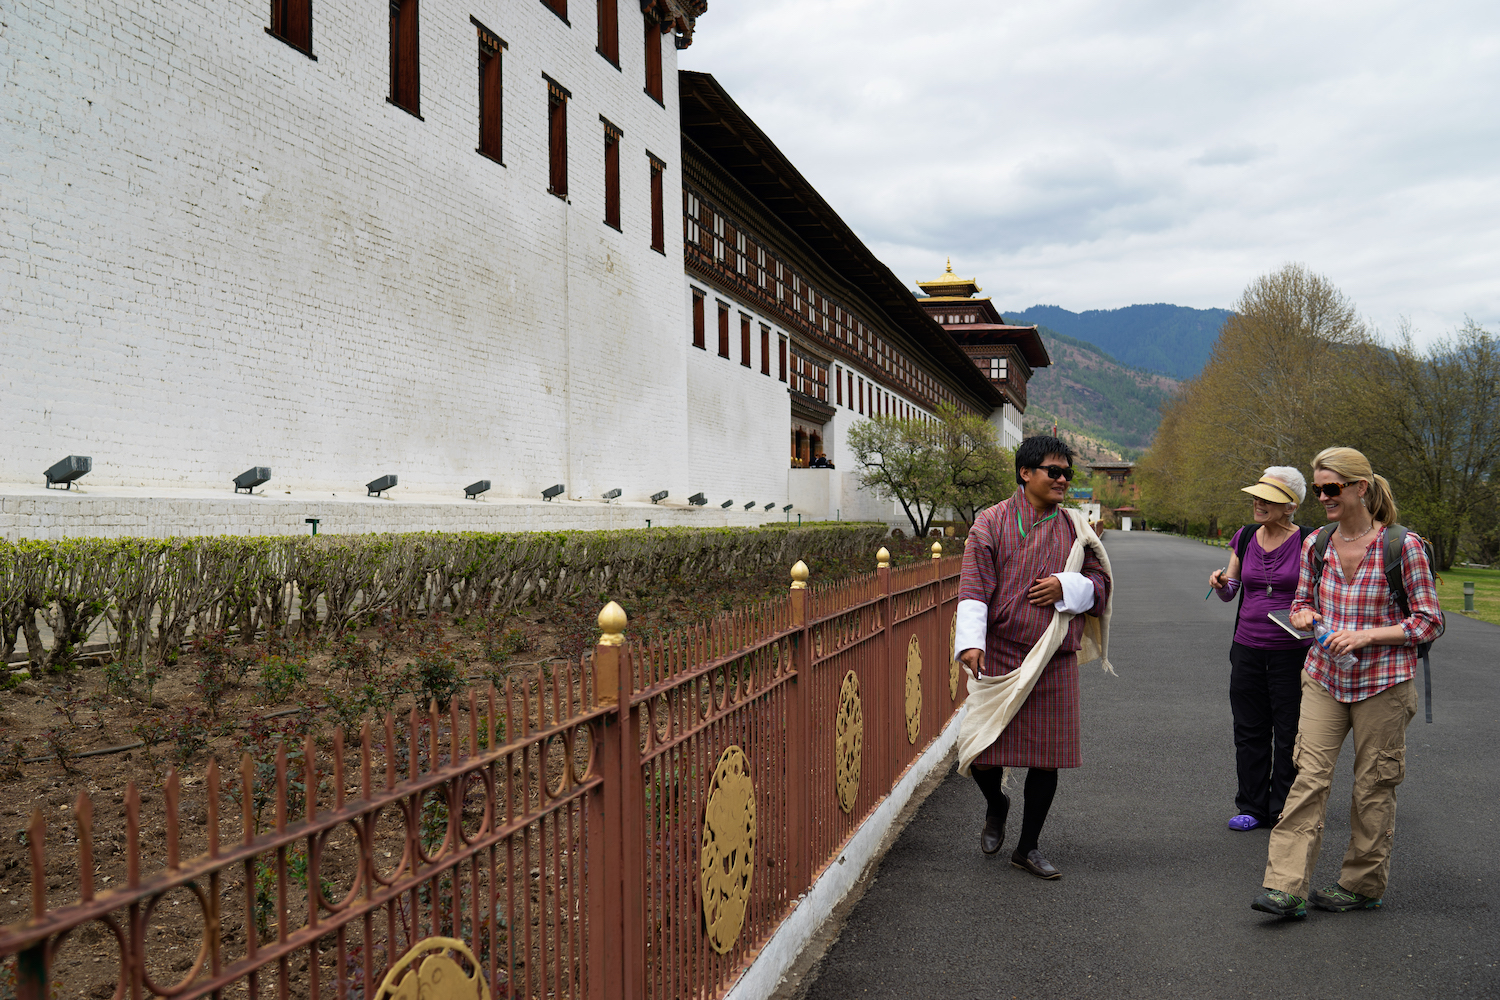 Guide in Bhutan via Dropbox.